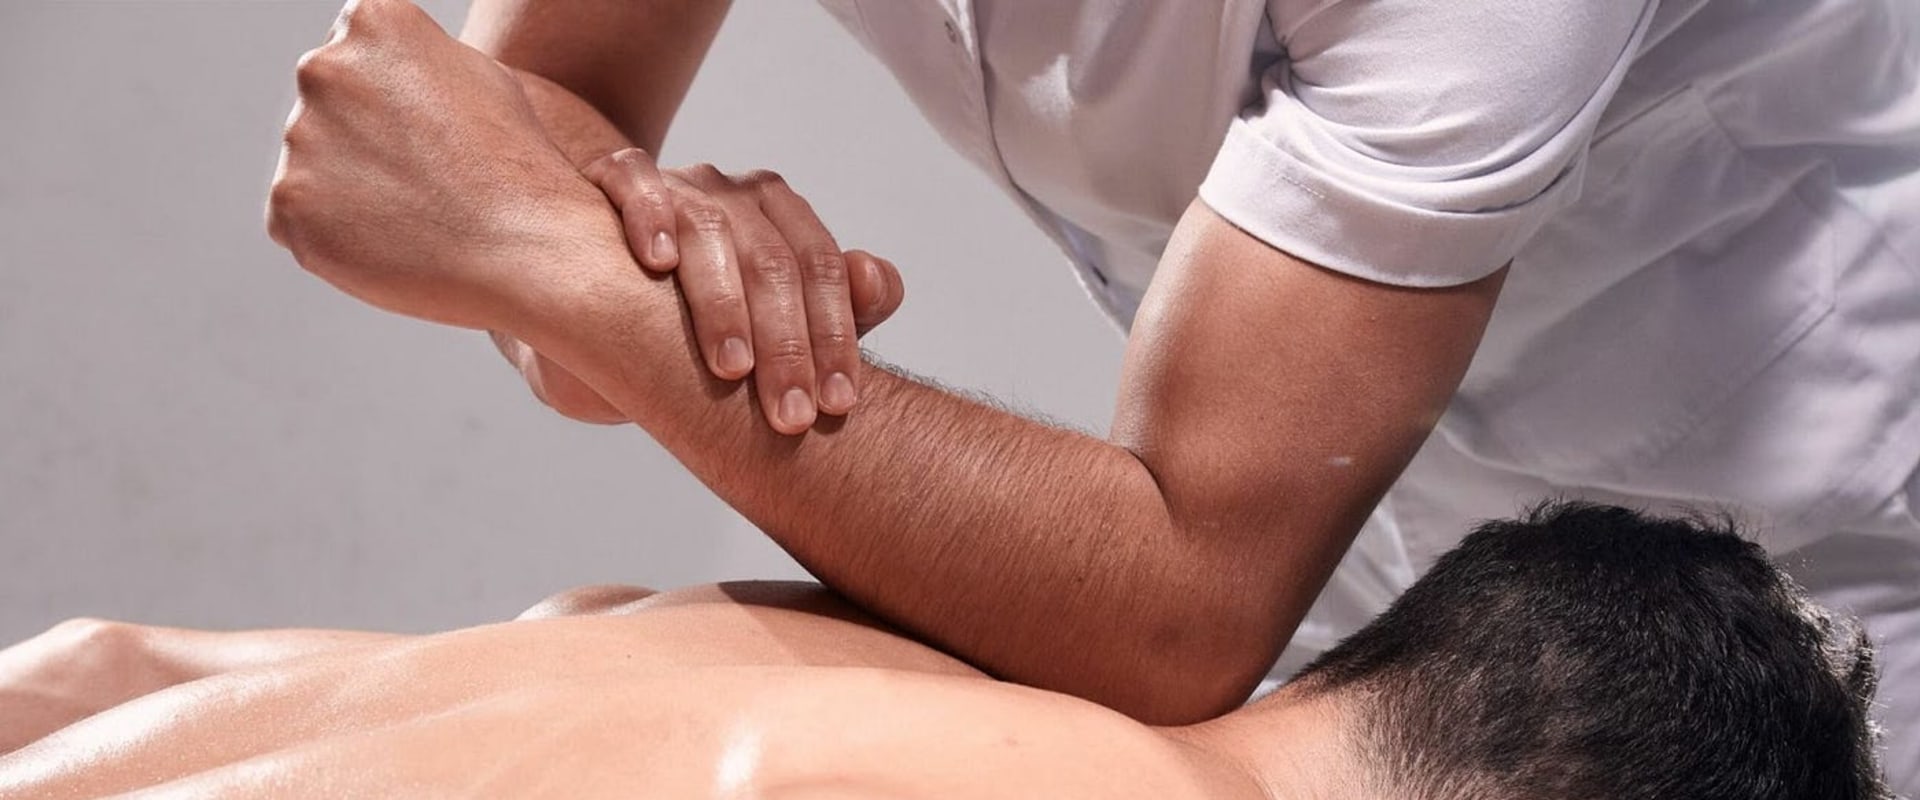 How often should a person get a deep tissue massage?